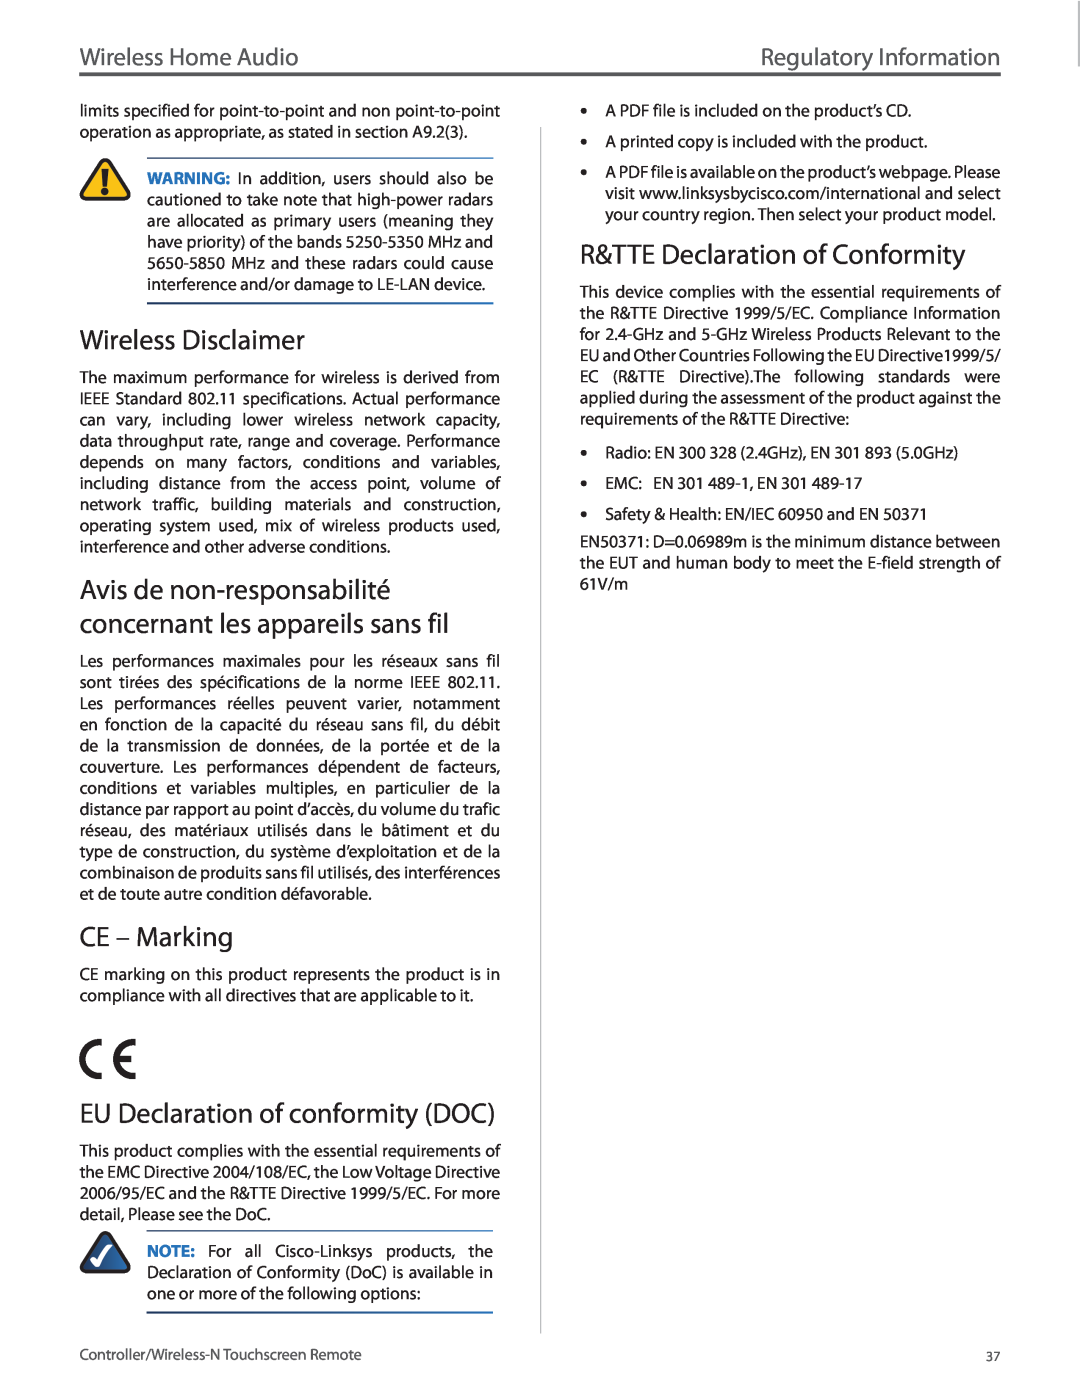 Linksys DMRW1000 Wireless Disclaimer, CE - Marking, EU Declaration of conformity DOC, R&TTE Declaration of Conformity 